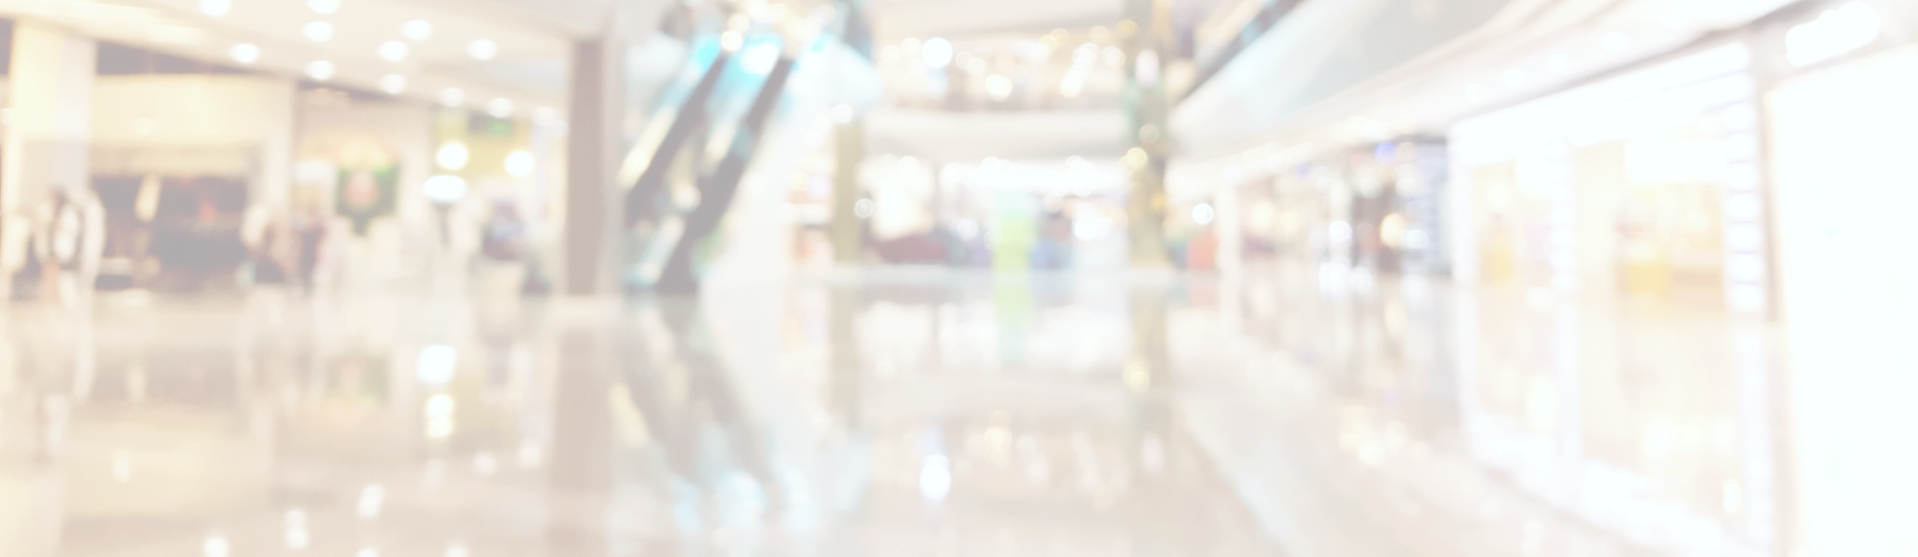 Blurred mall corridor